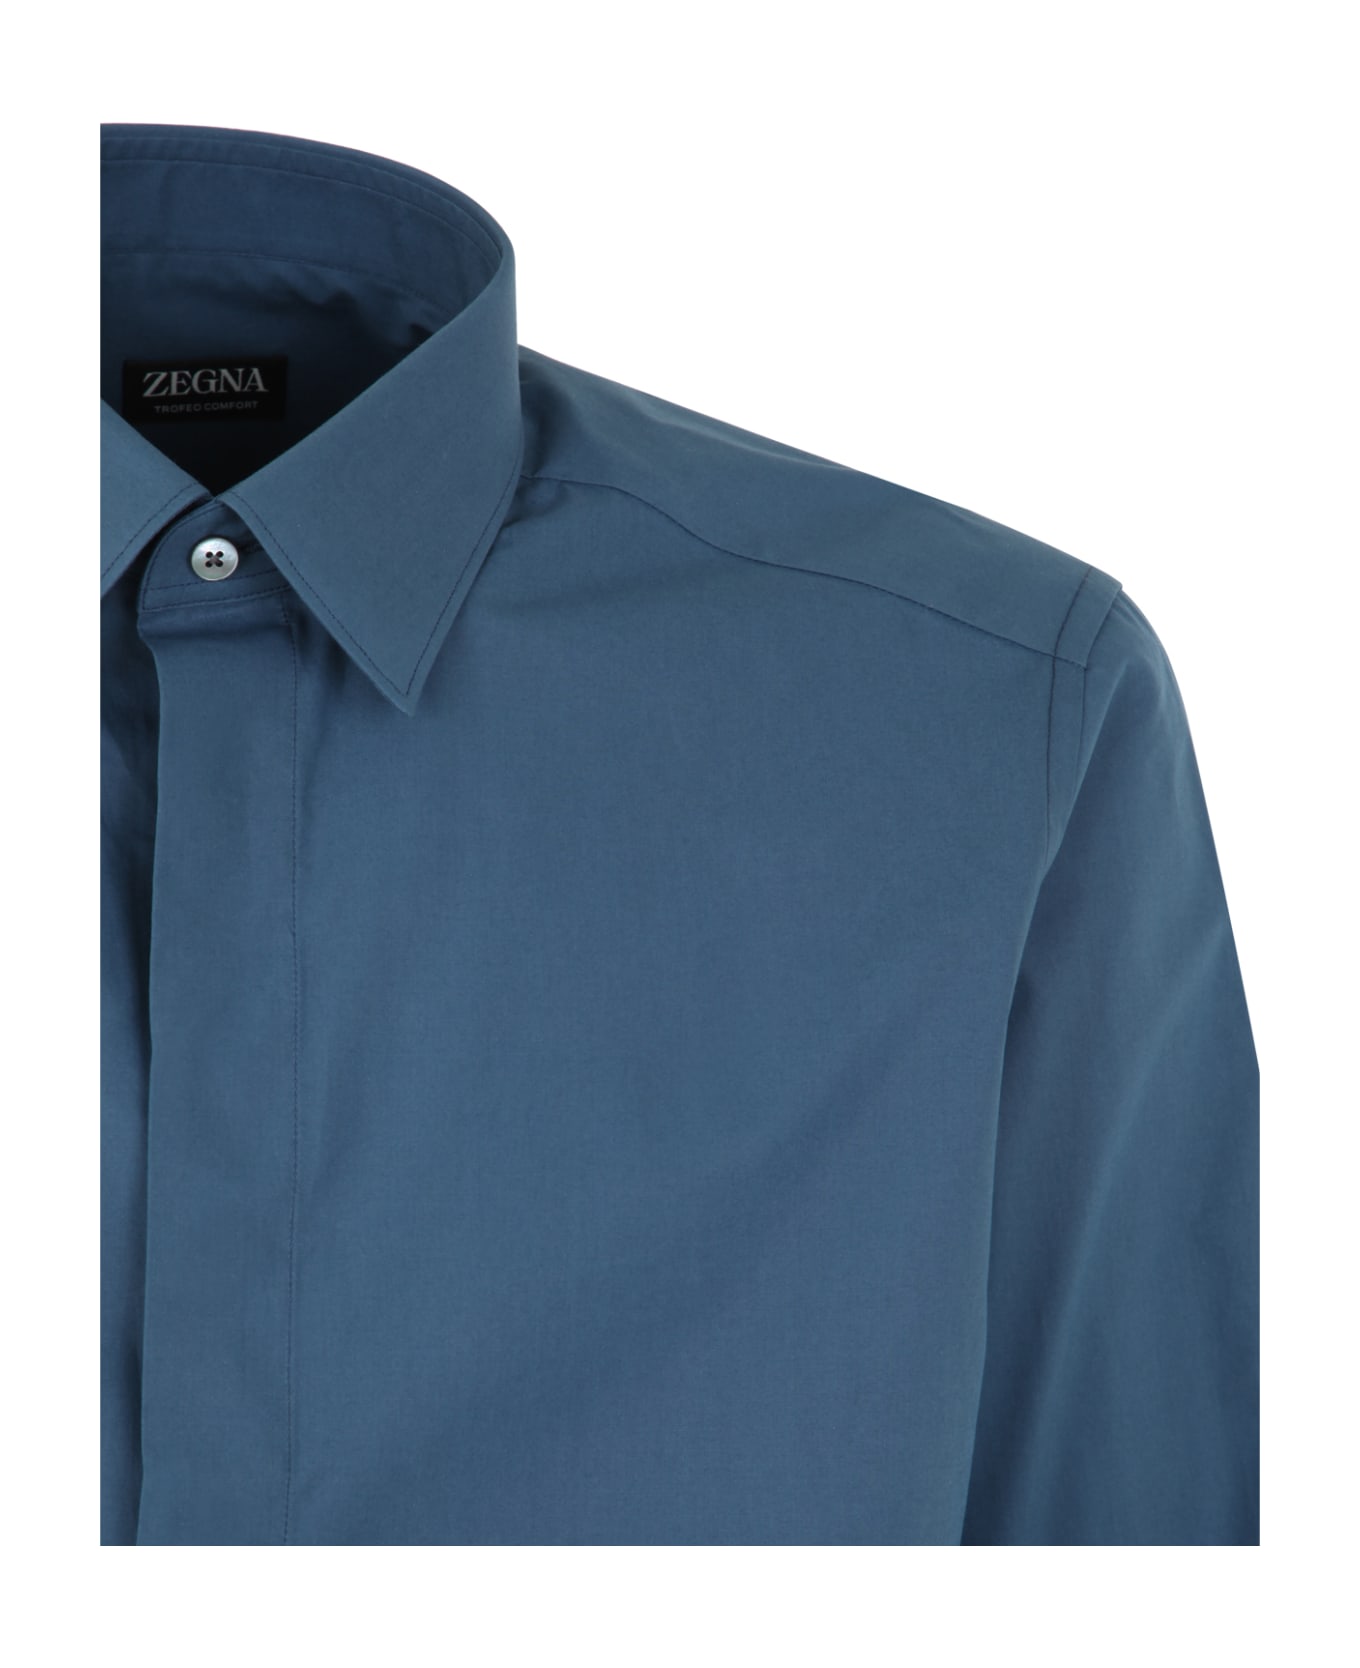 Ermenegildo Zegna Trofeo Comfort Fitted Long Sleeves Shirt - Teal Blue